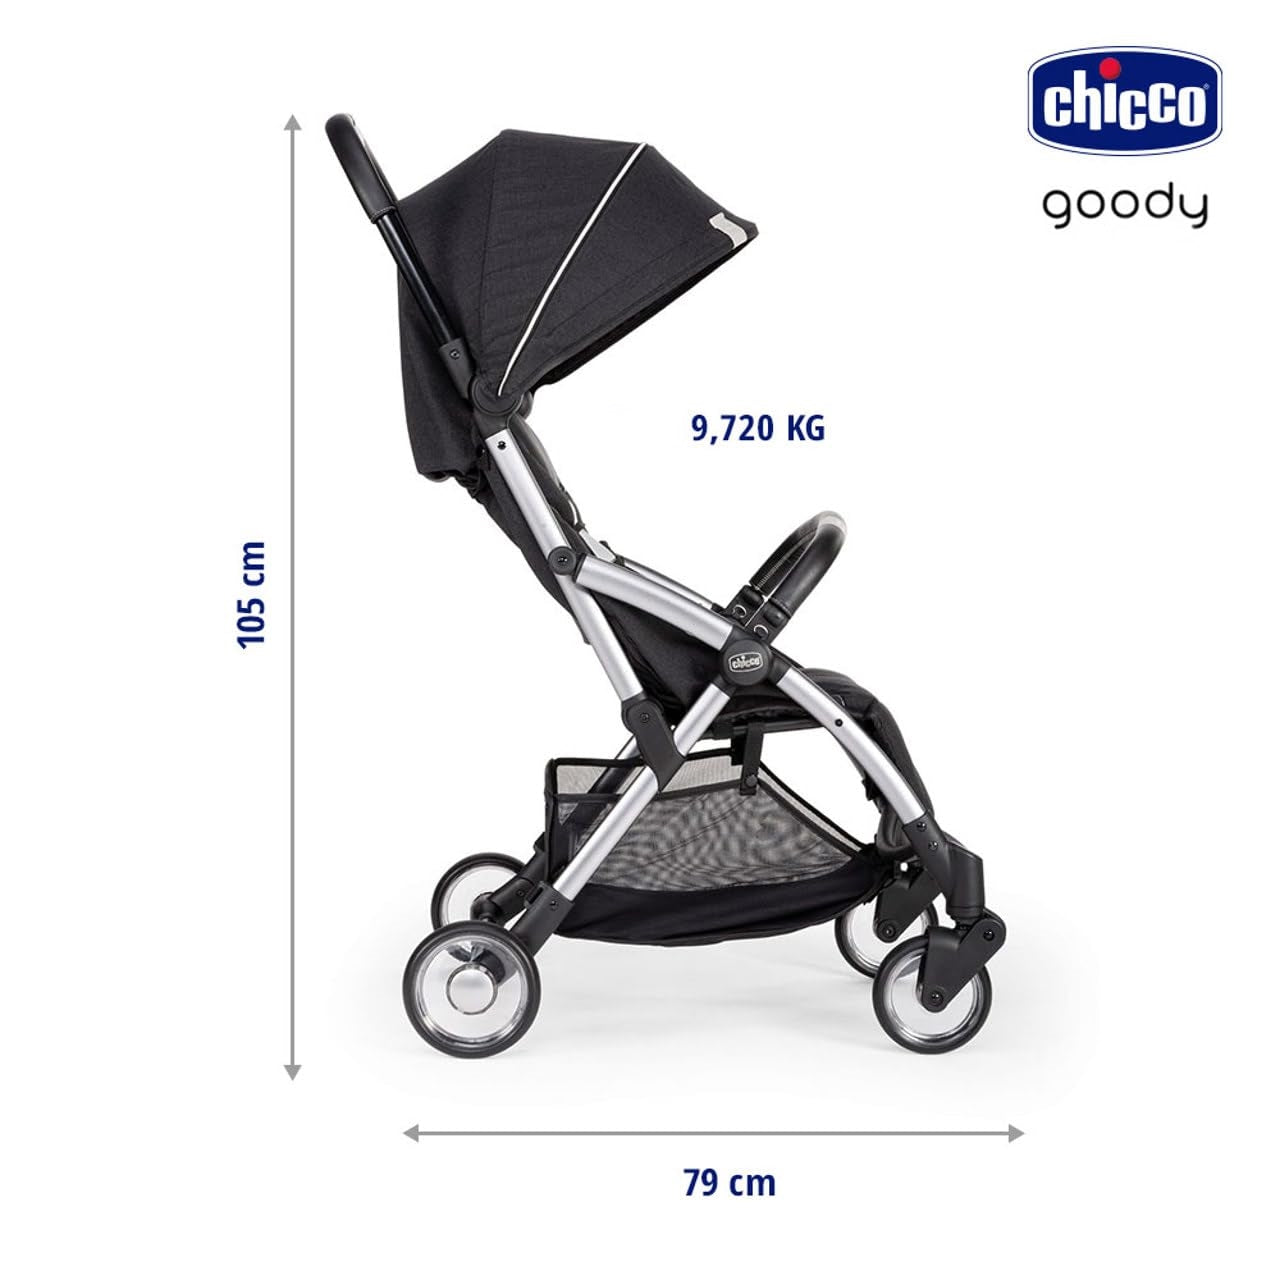 Chicco Goody Graphite Stroller